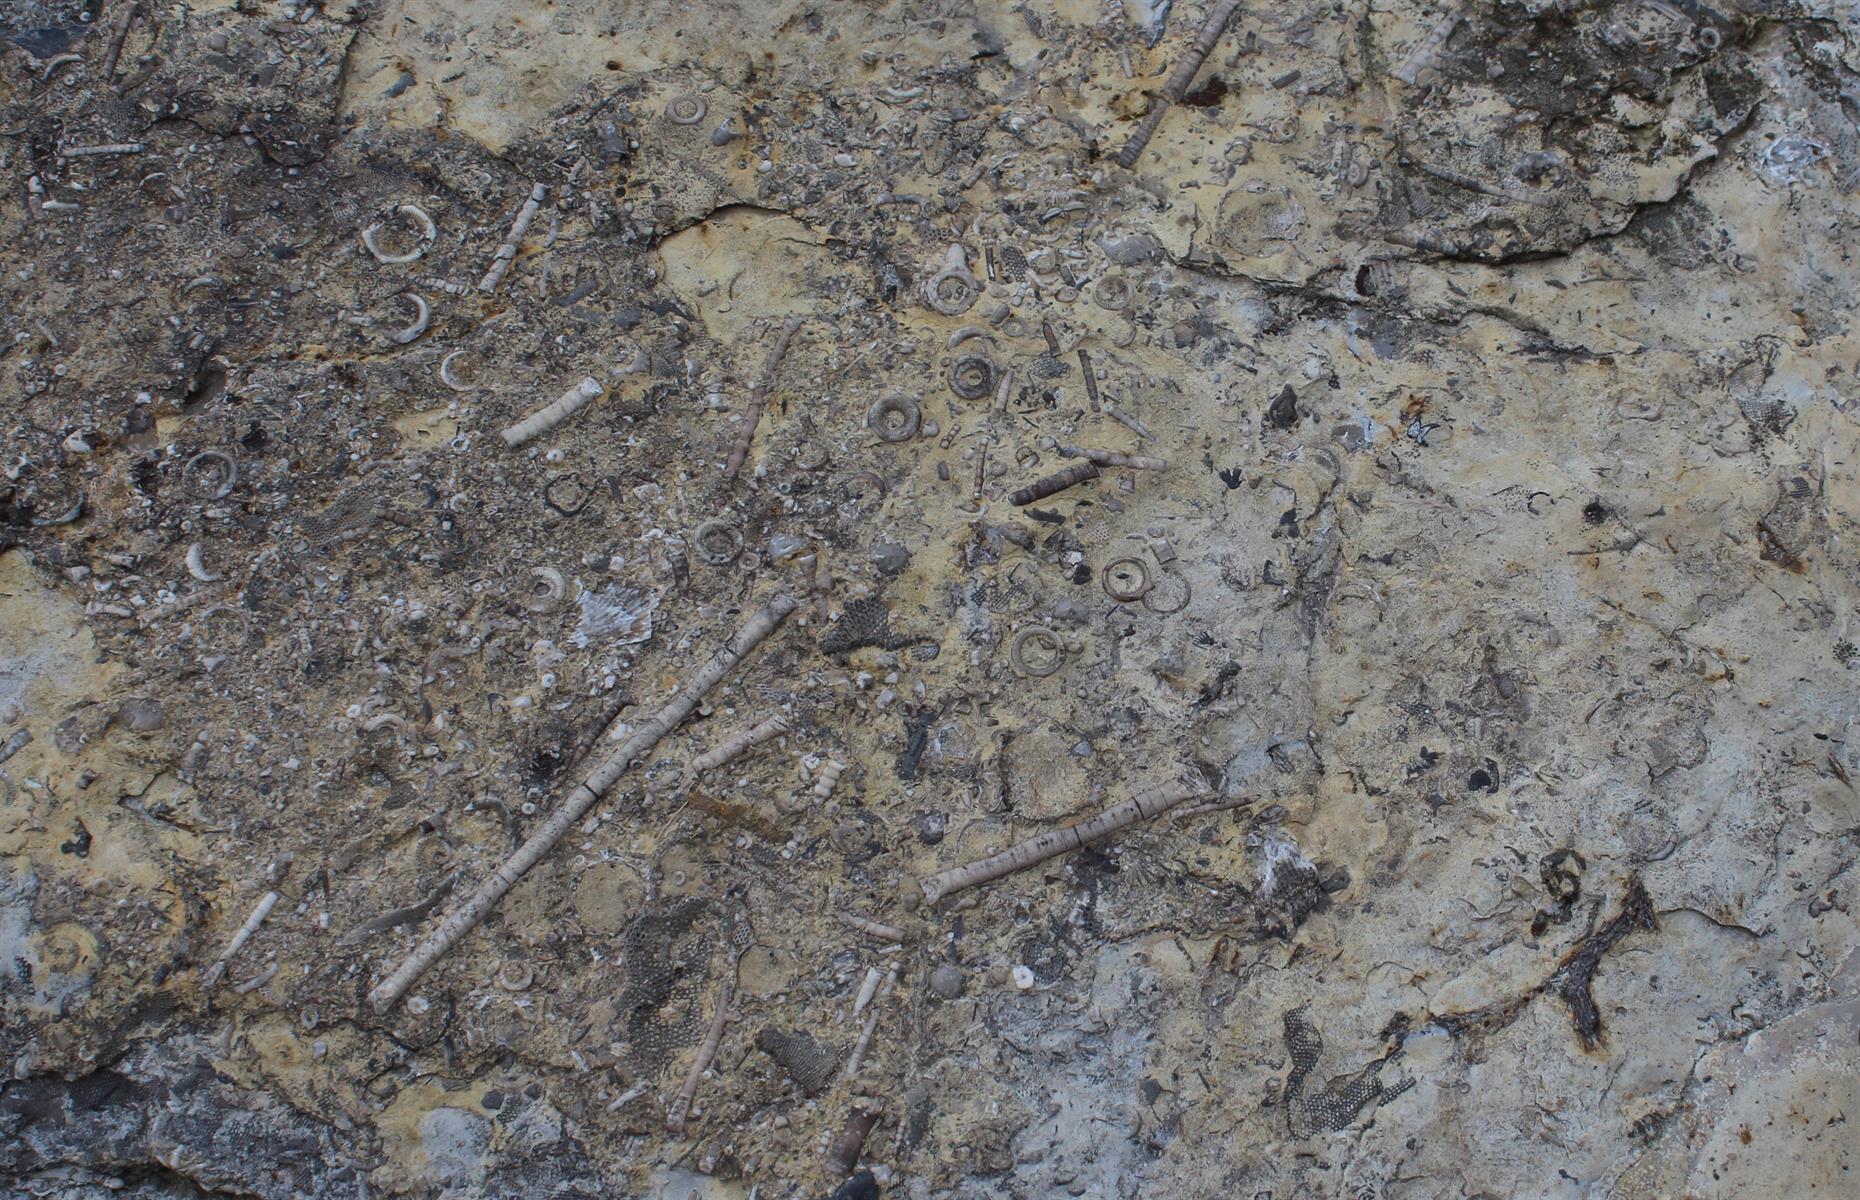 Iowa: Devonian fossils